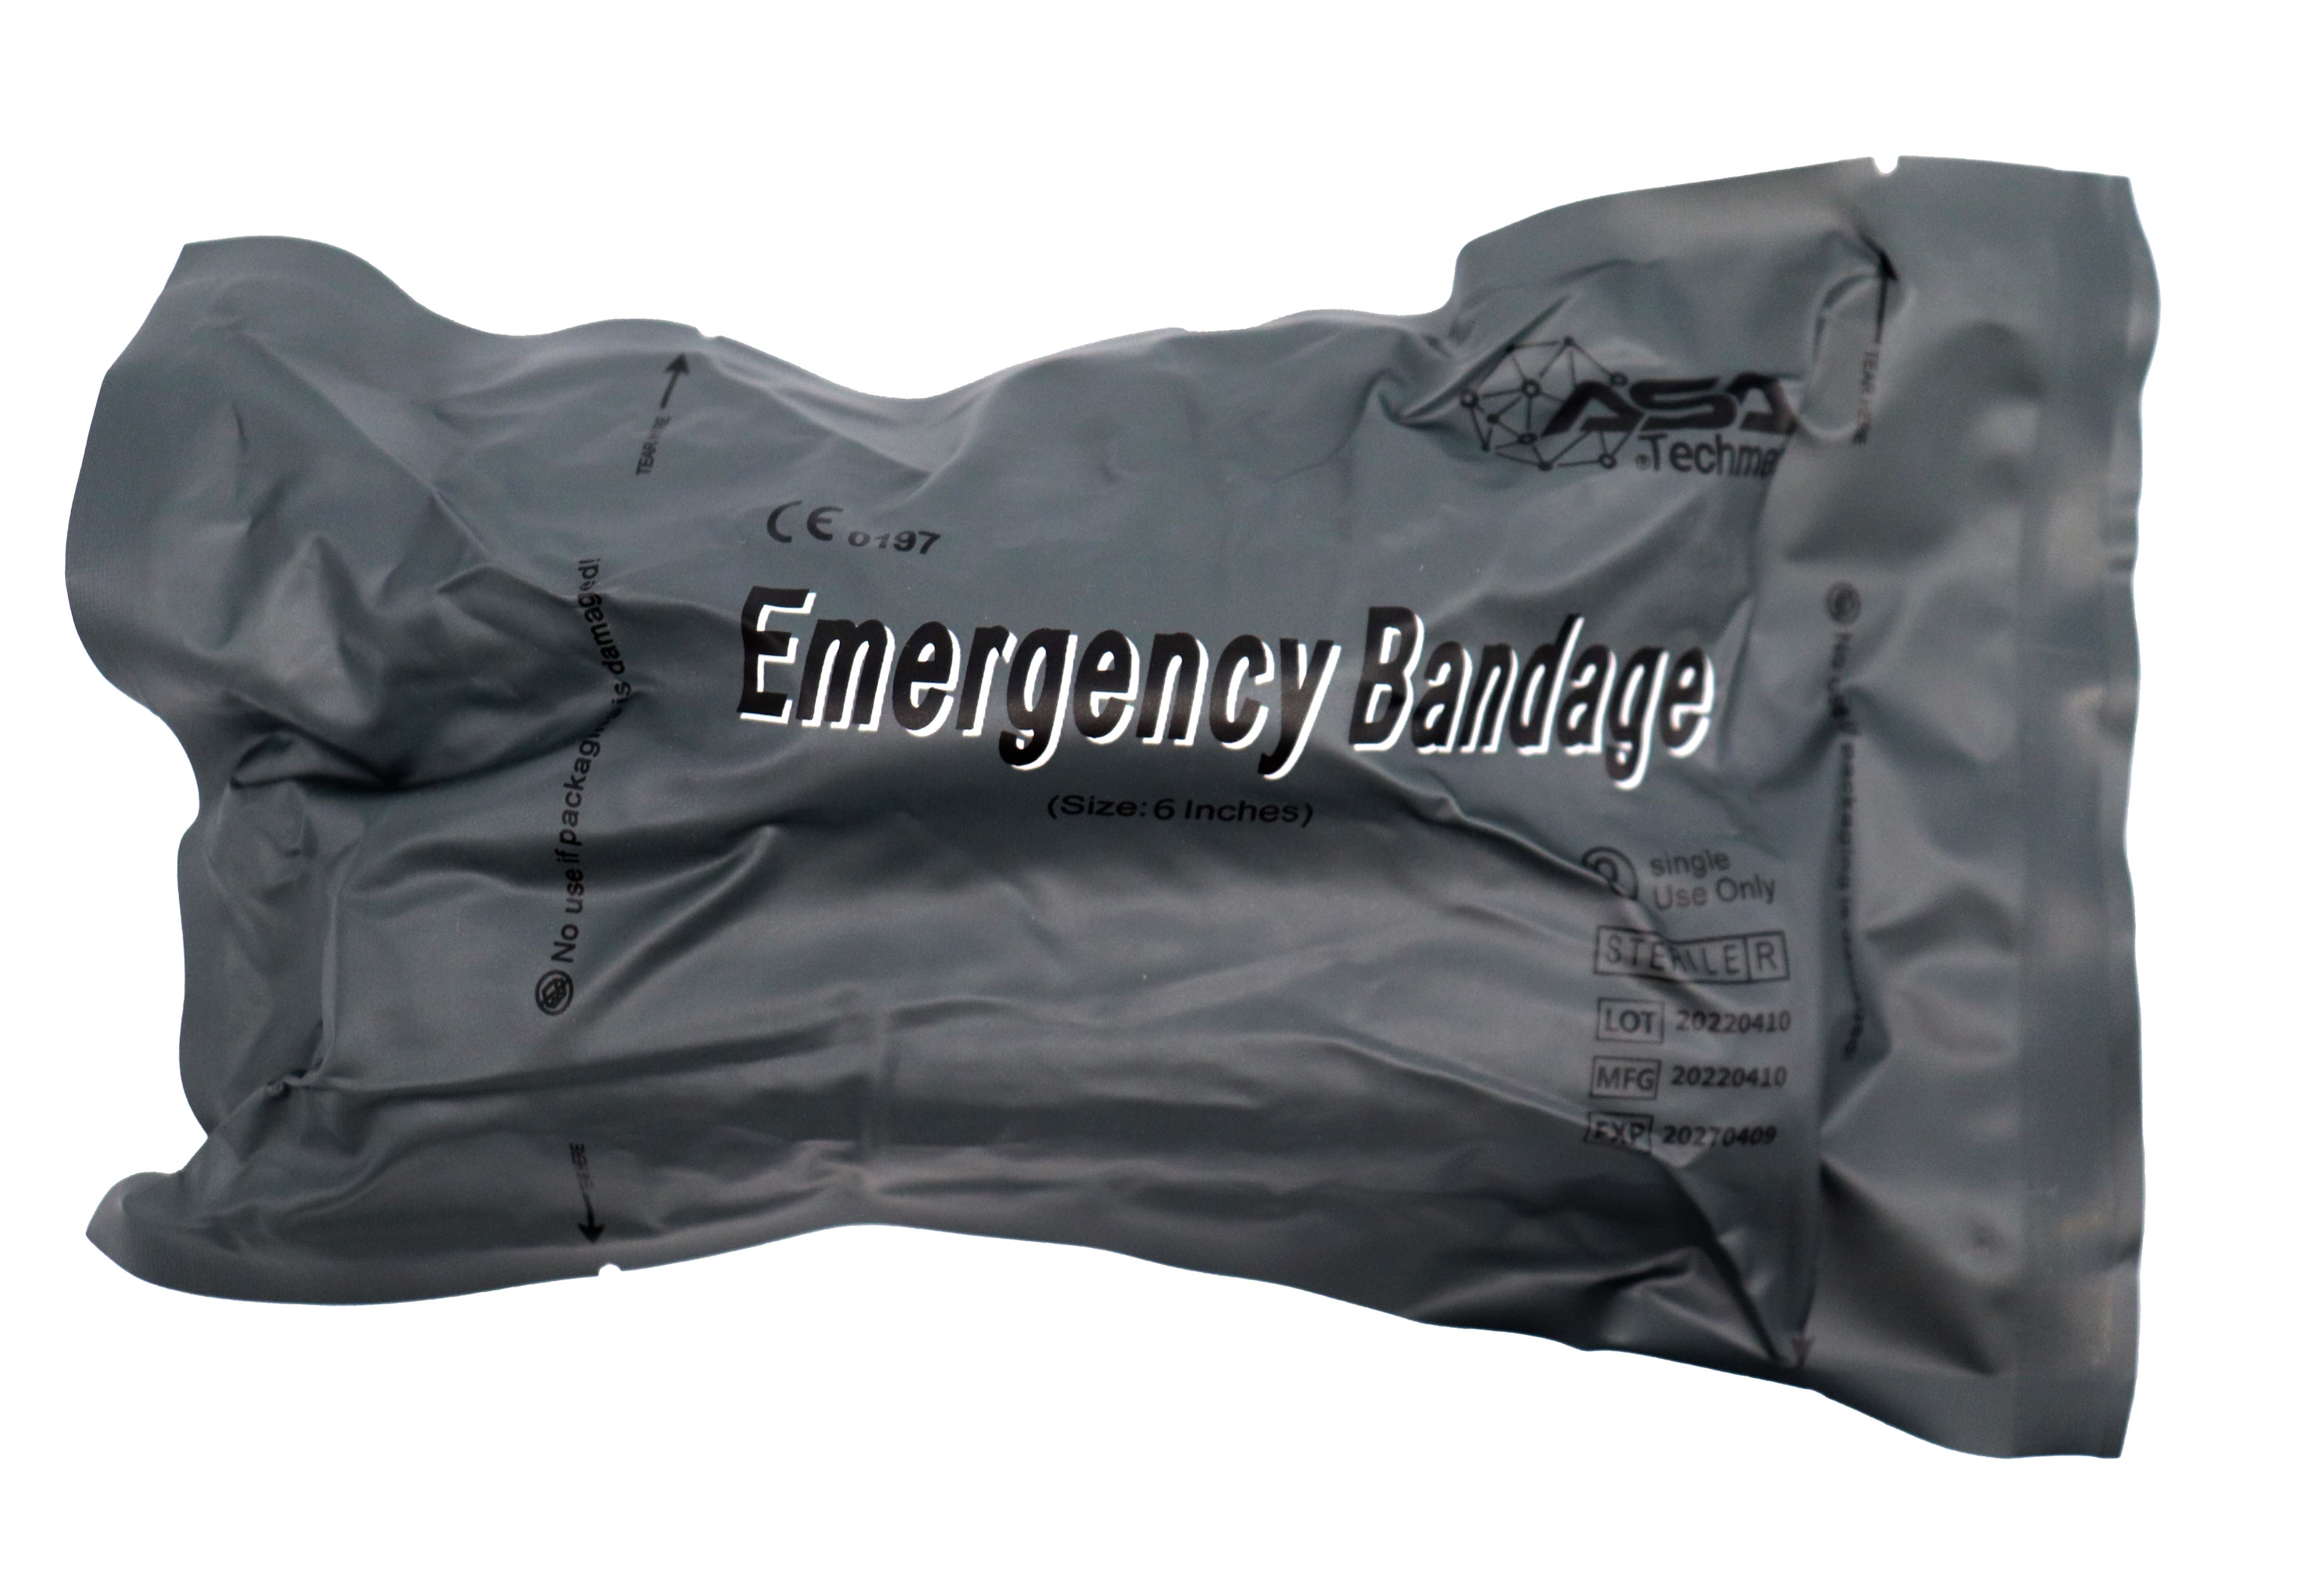 The Emergency Bandage 6” (Vendaje Israelí) – Tacticalmd